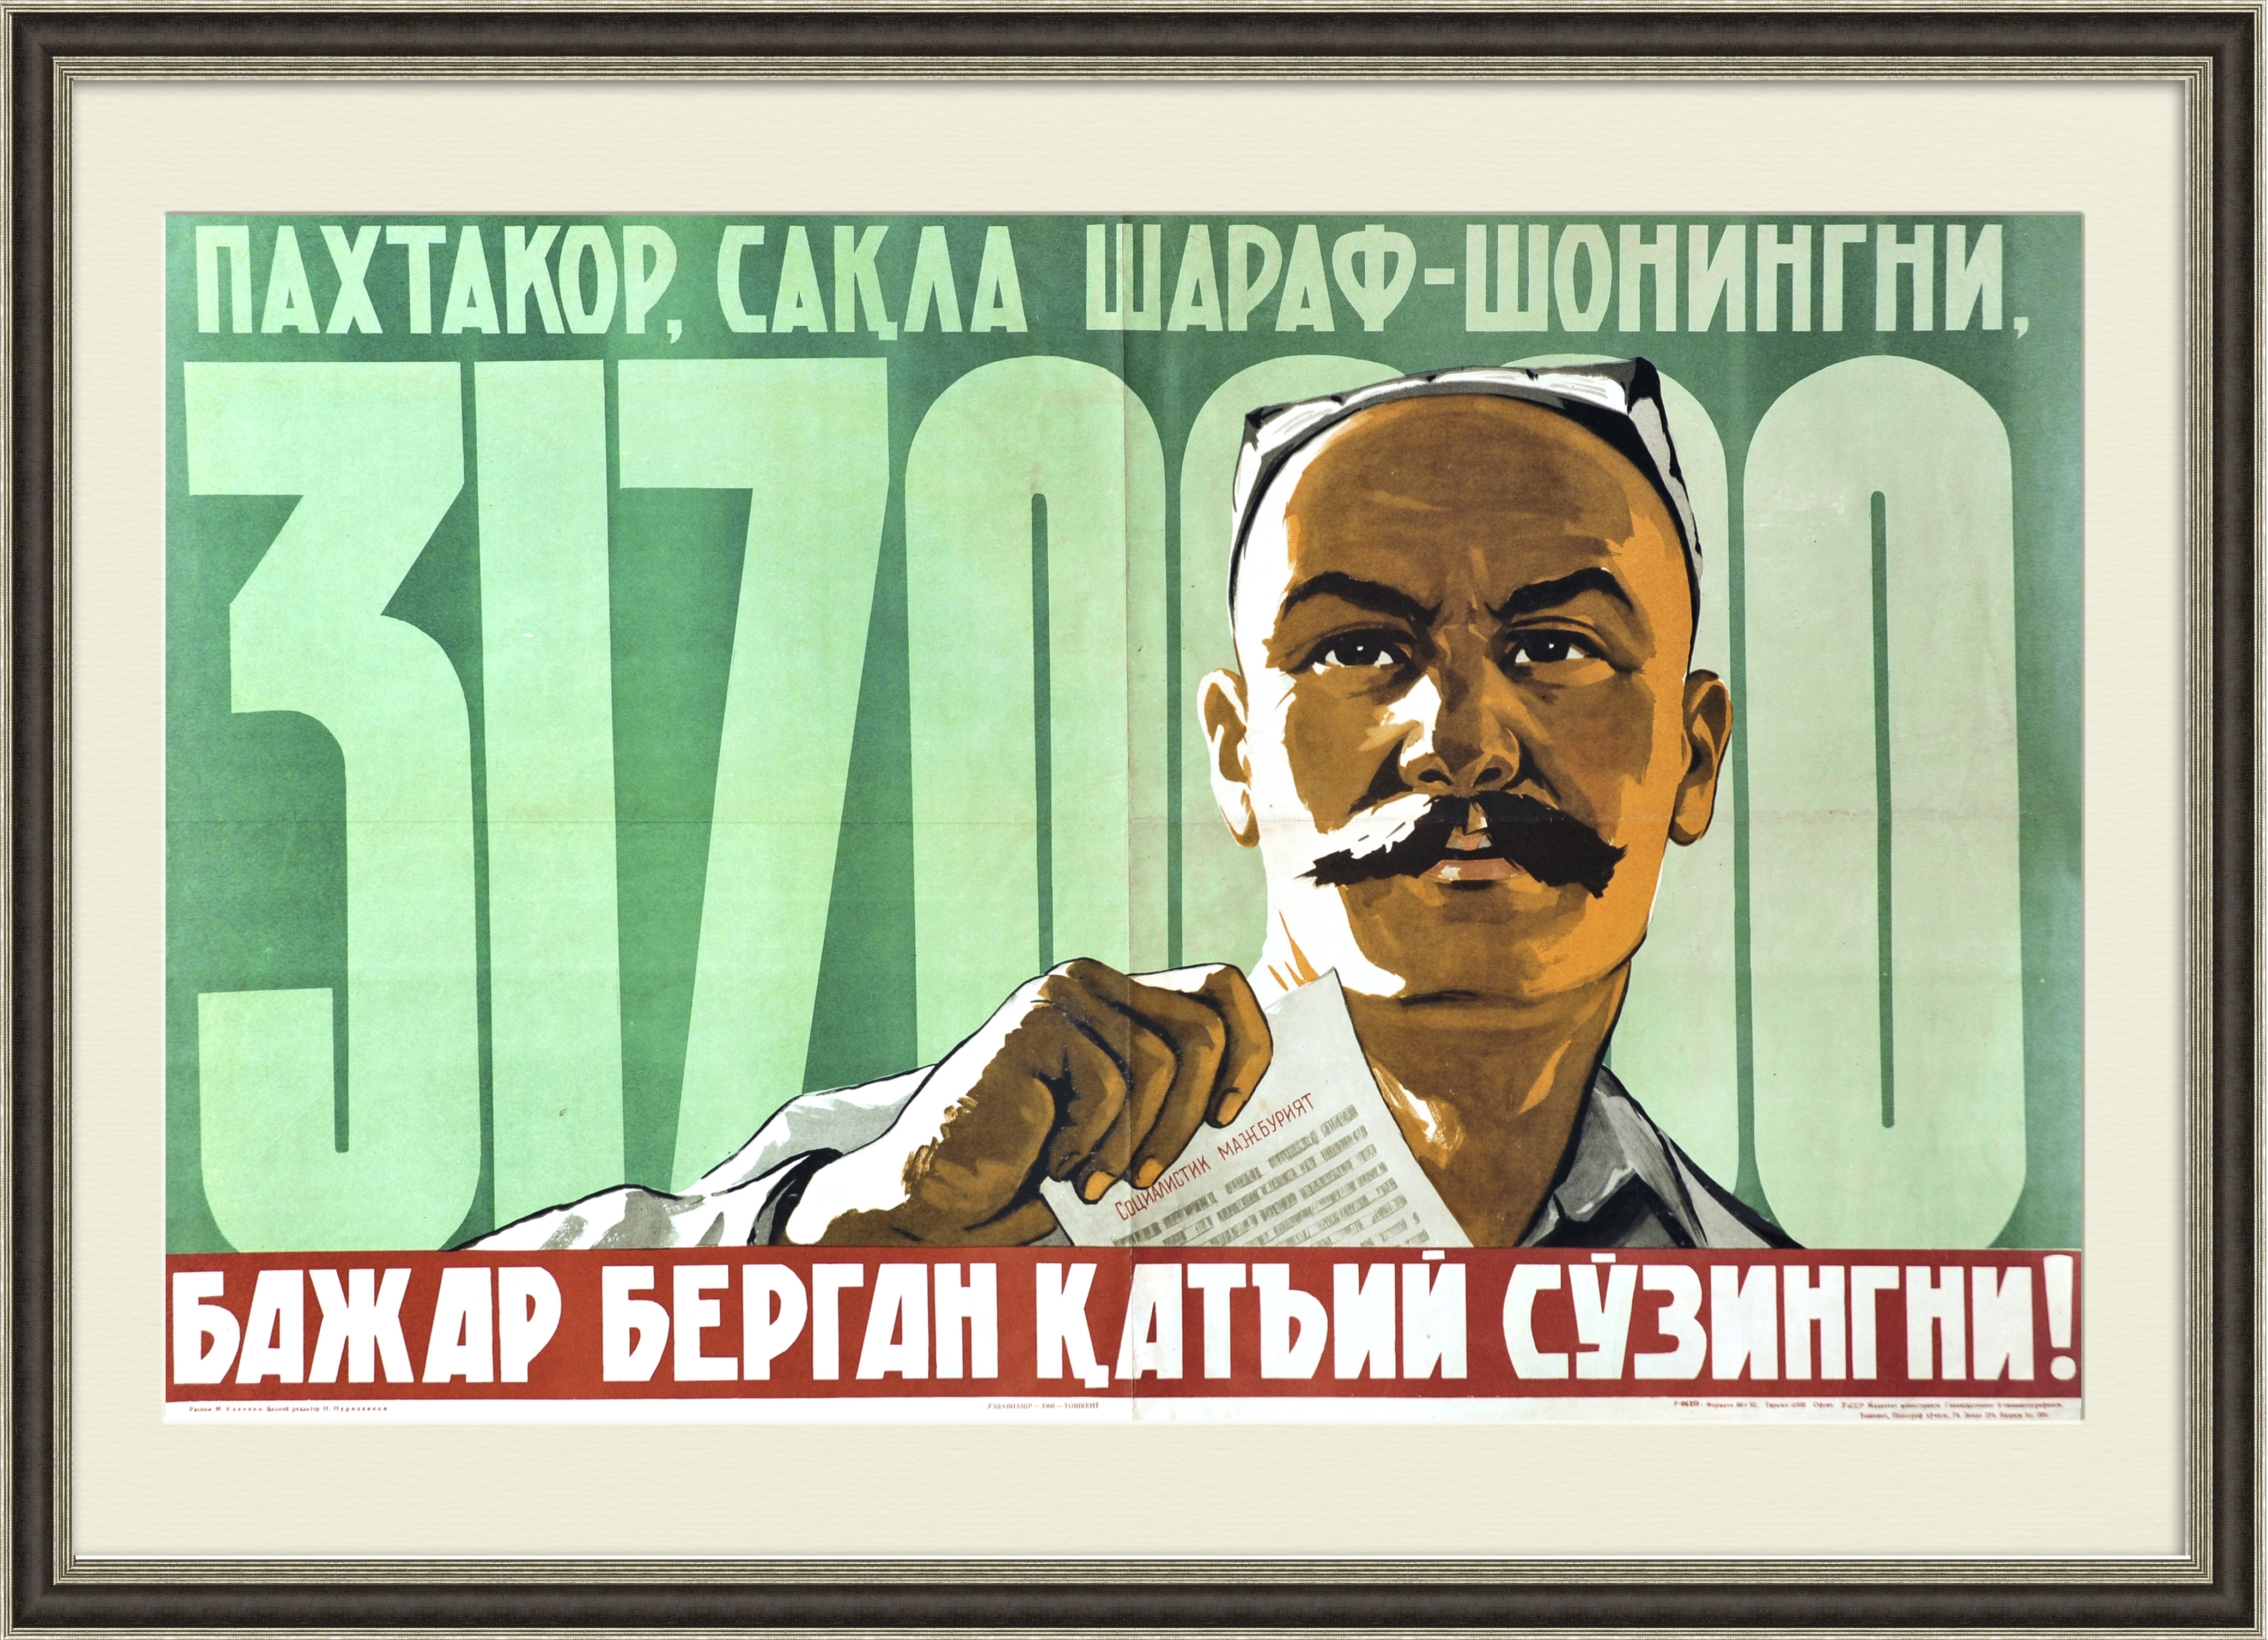 В каком году был создан плакат. Советские плакаты. Плакаты узбекской ССР. Советские плакаты Узбекистан. Казахские советские плакаты.